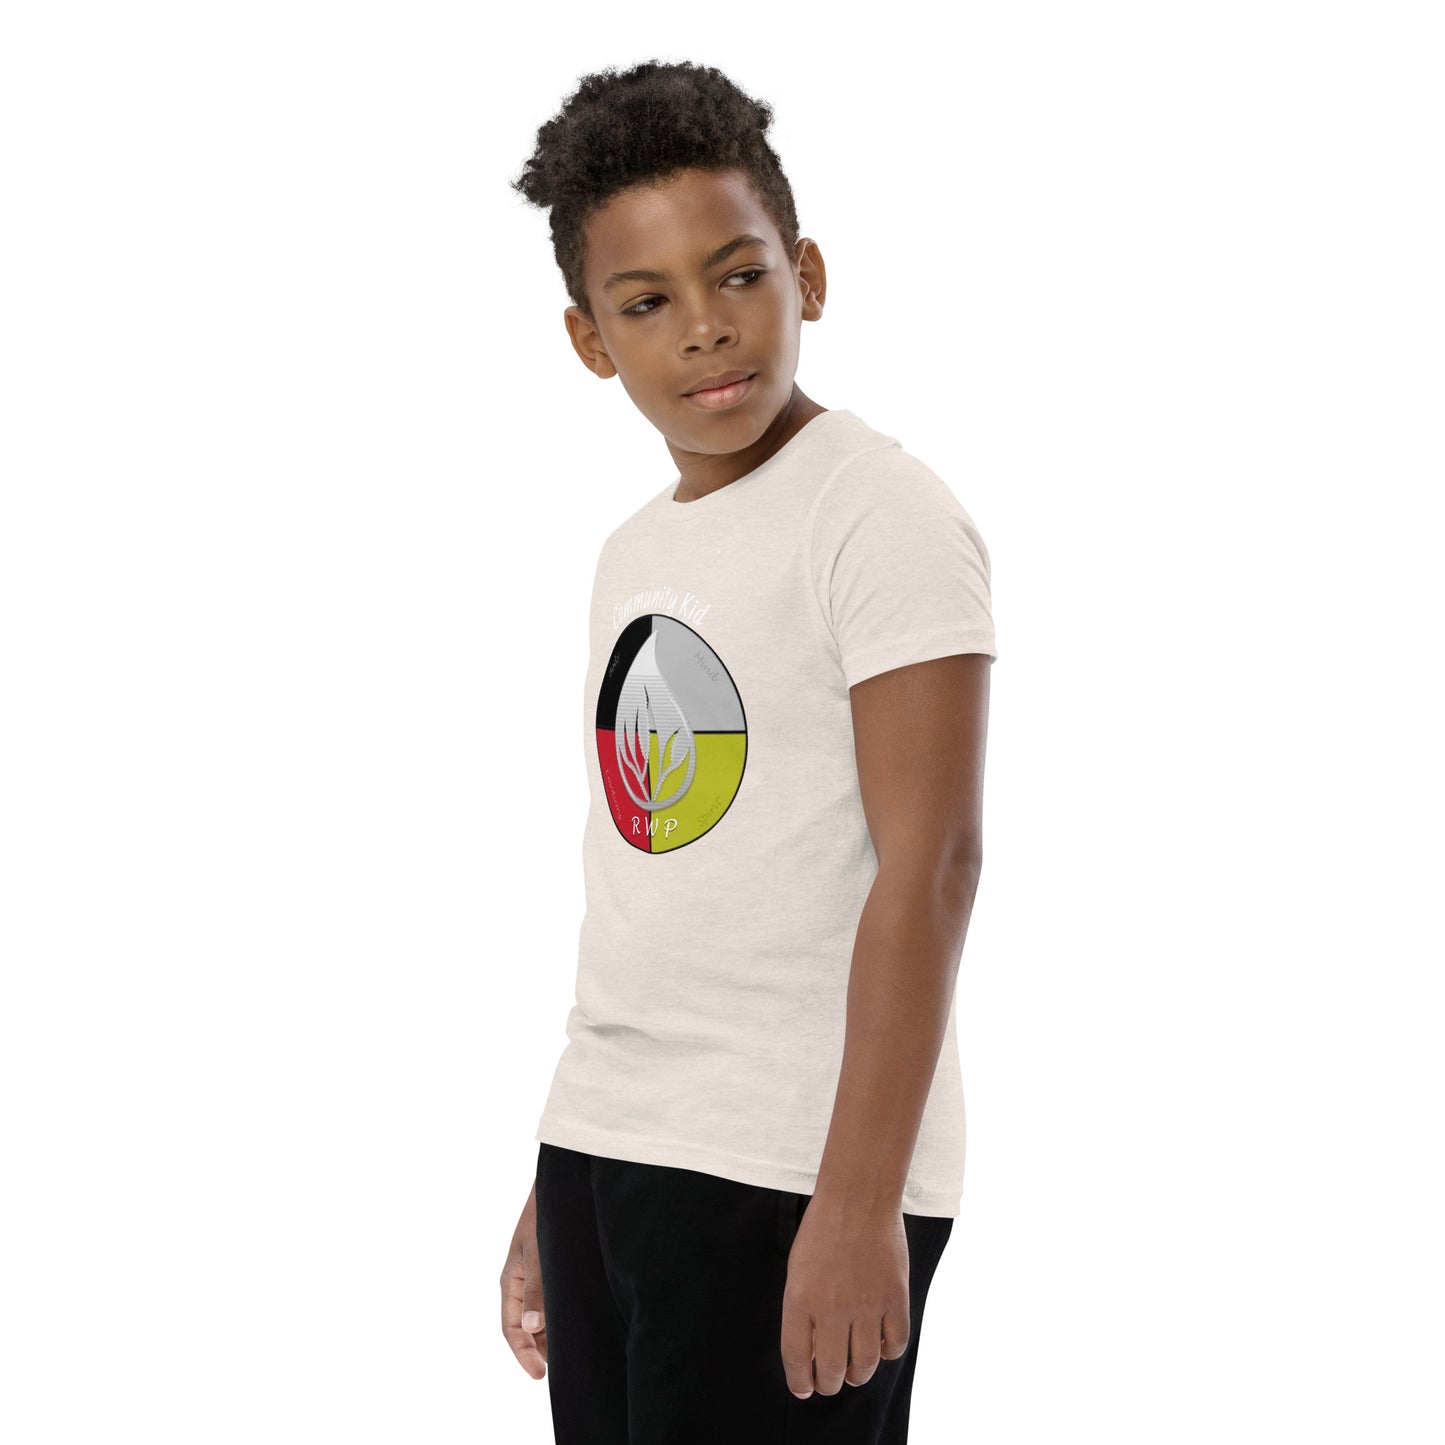 Community Kid Youth Short Sleeve T-Shirt